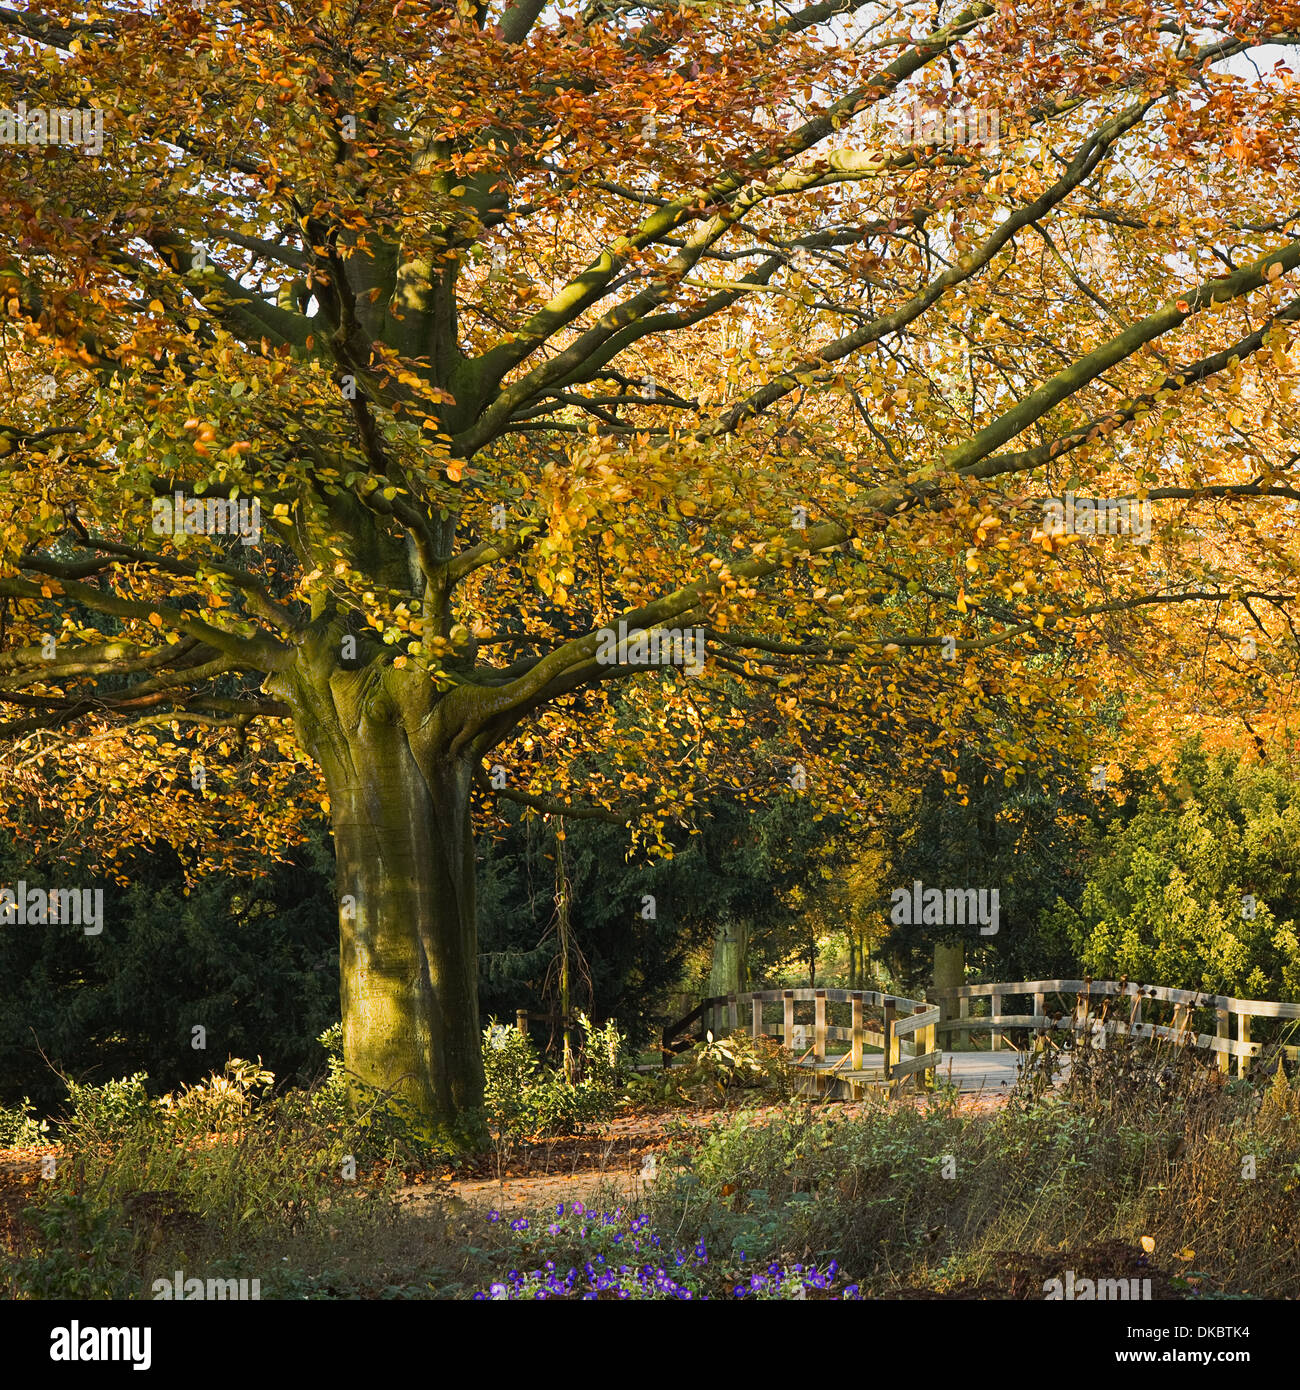 Beech tree, bridge, flowers and fallen leaves in park in autumn Stock Photo